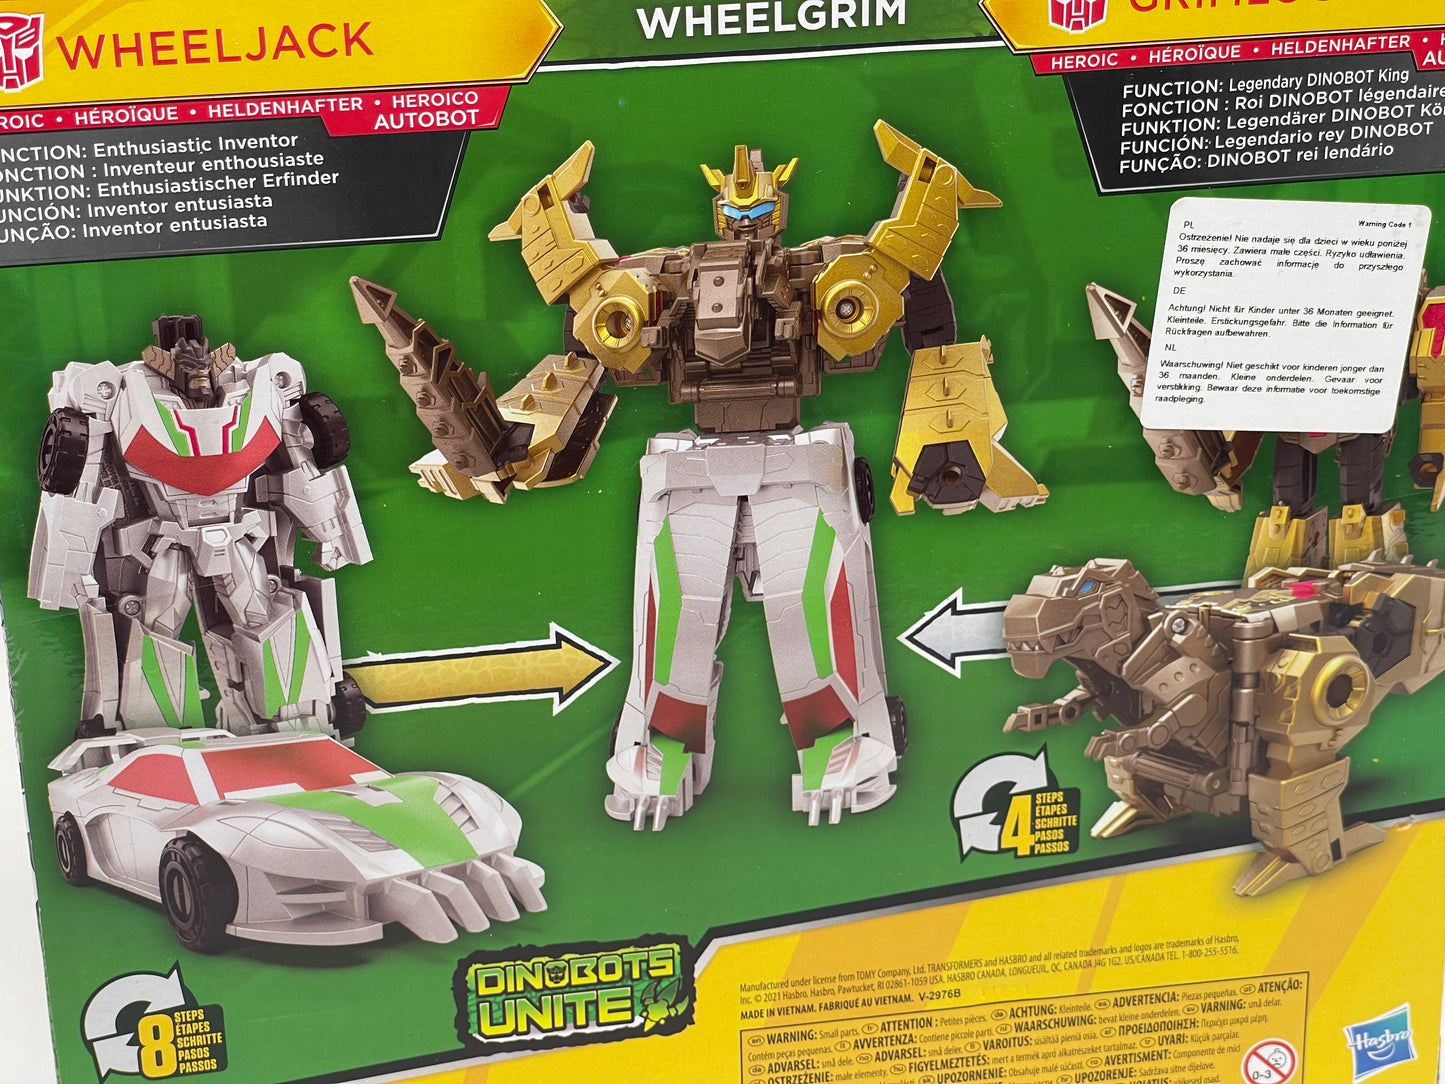 Transformers Bumblebee Cyberverse Adventures Wheeljack & Grimlock Wheelgrim